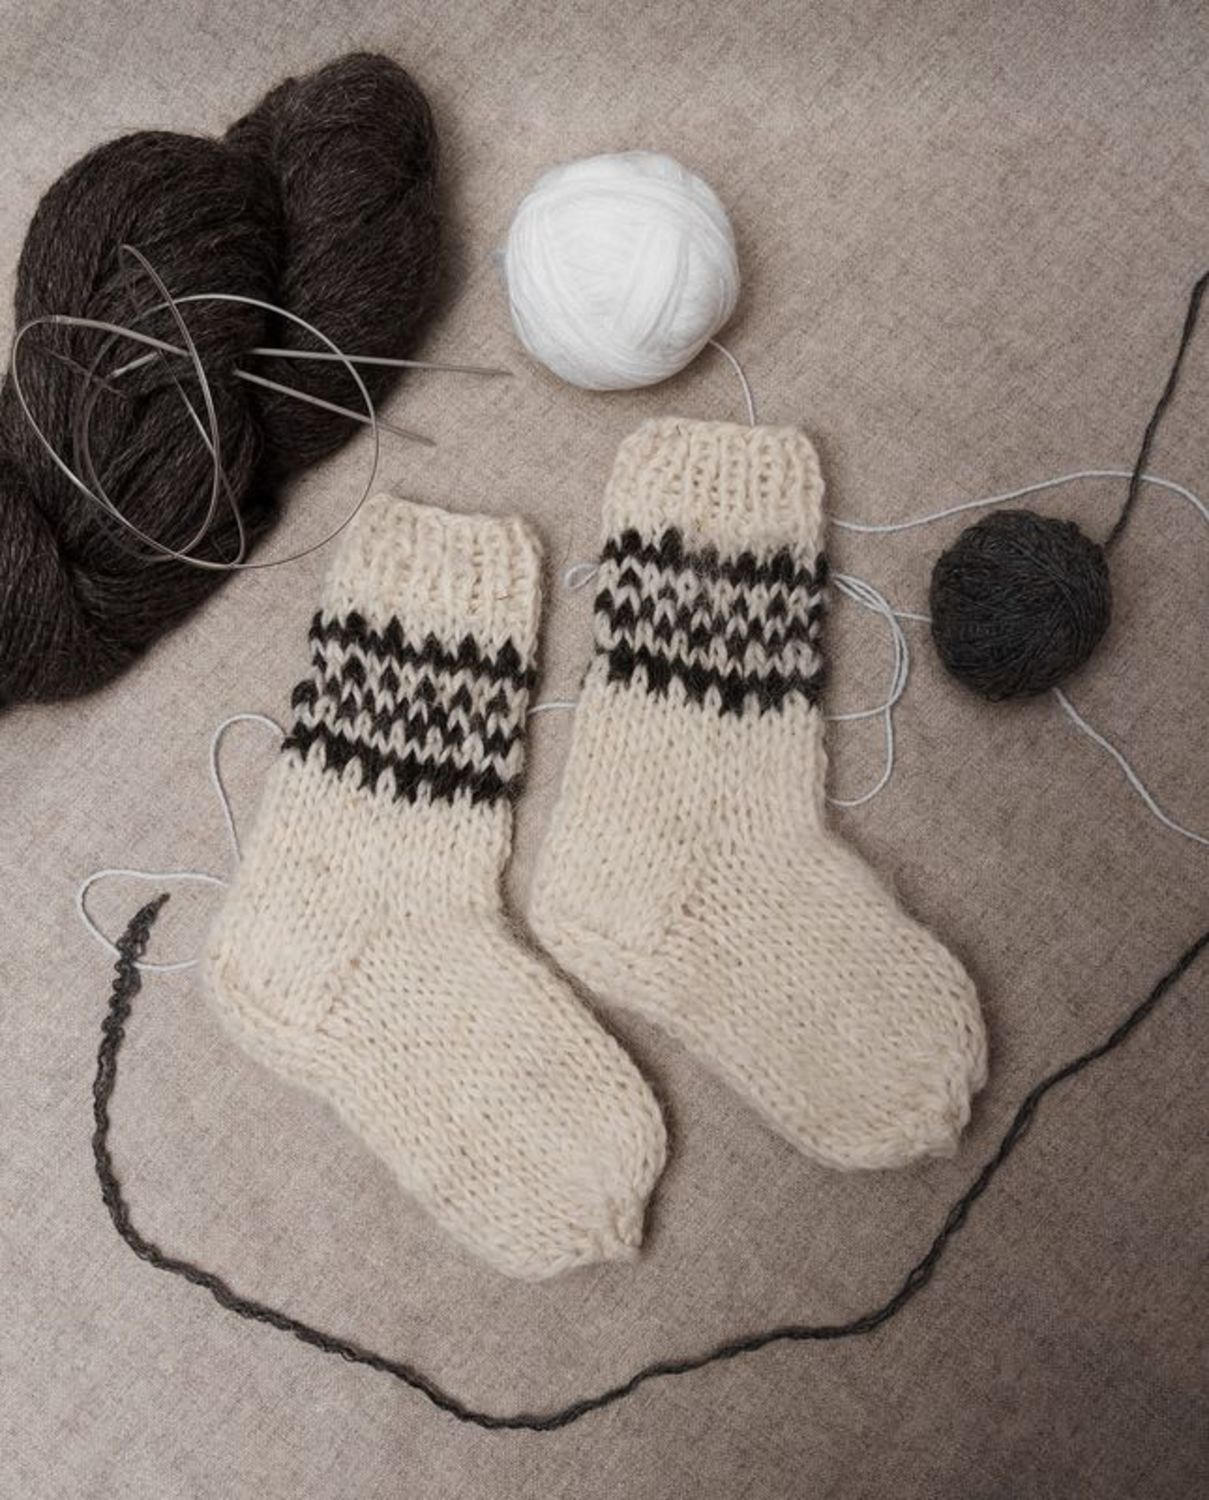 Children's warm socks made of wool photo 1